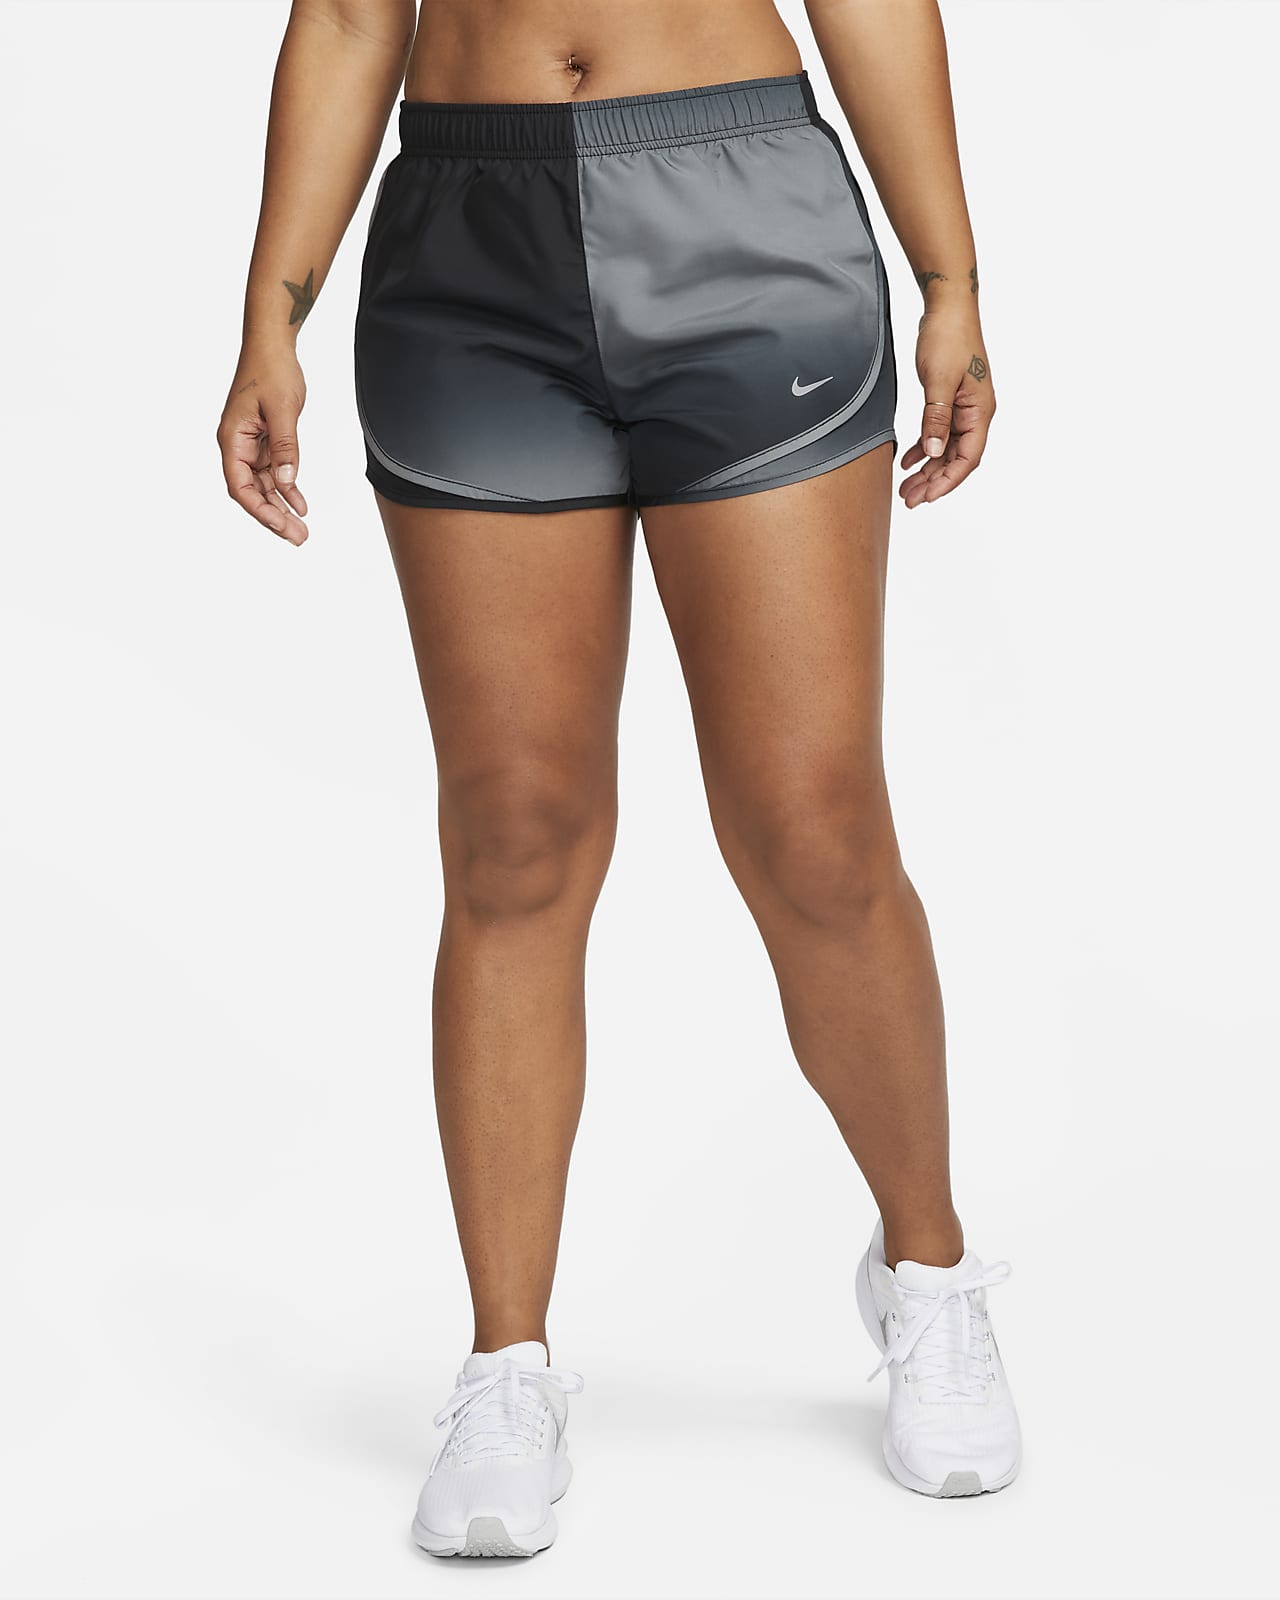 Shorts de running con ropa interior para Nike Nike.com